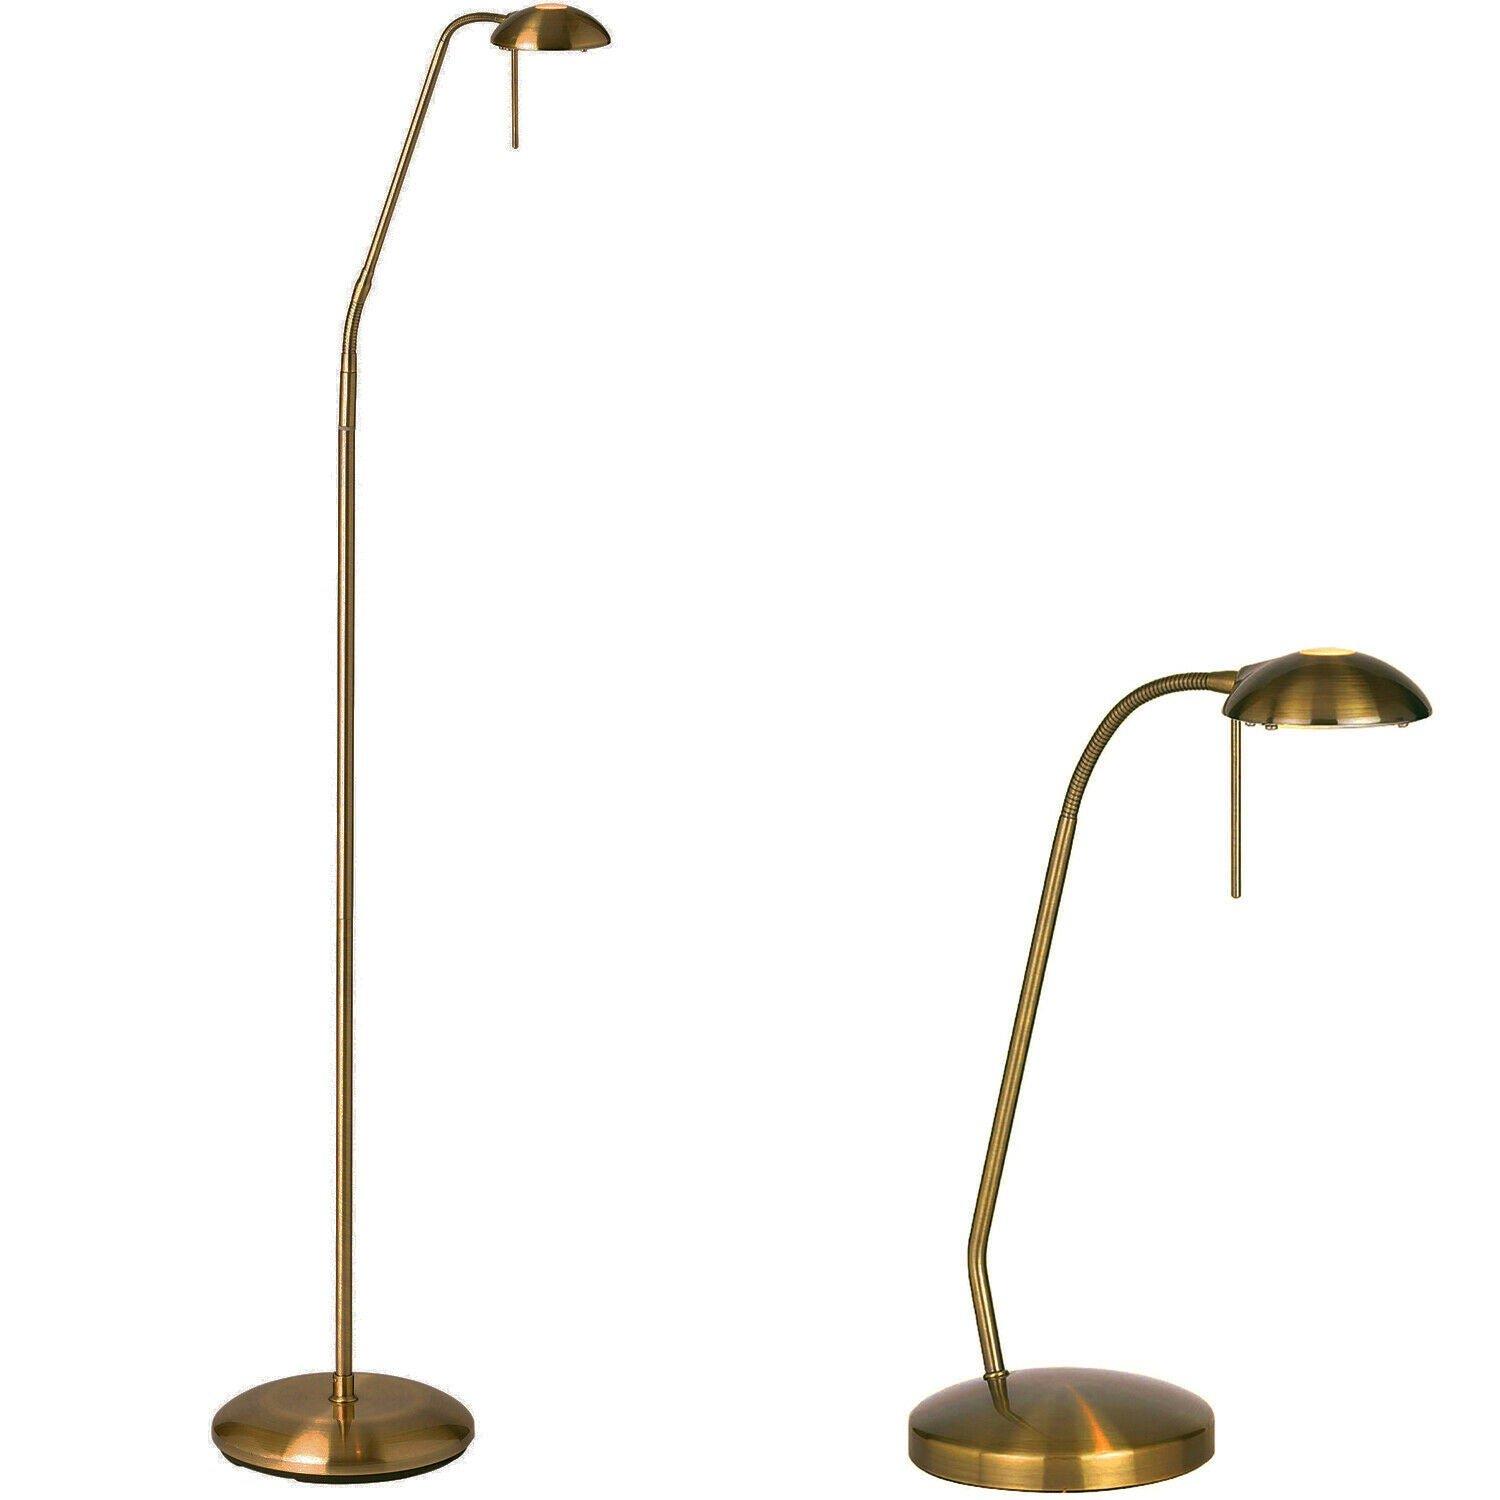 Standing Floor & Table Lamp Set Antique Brass Touch Dimmer Adjustable Neck Light